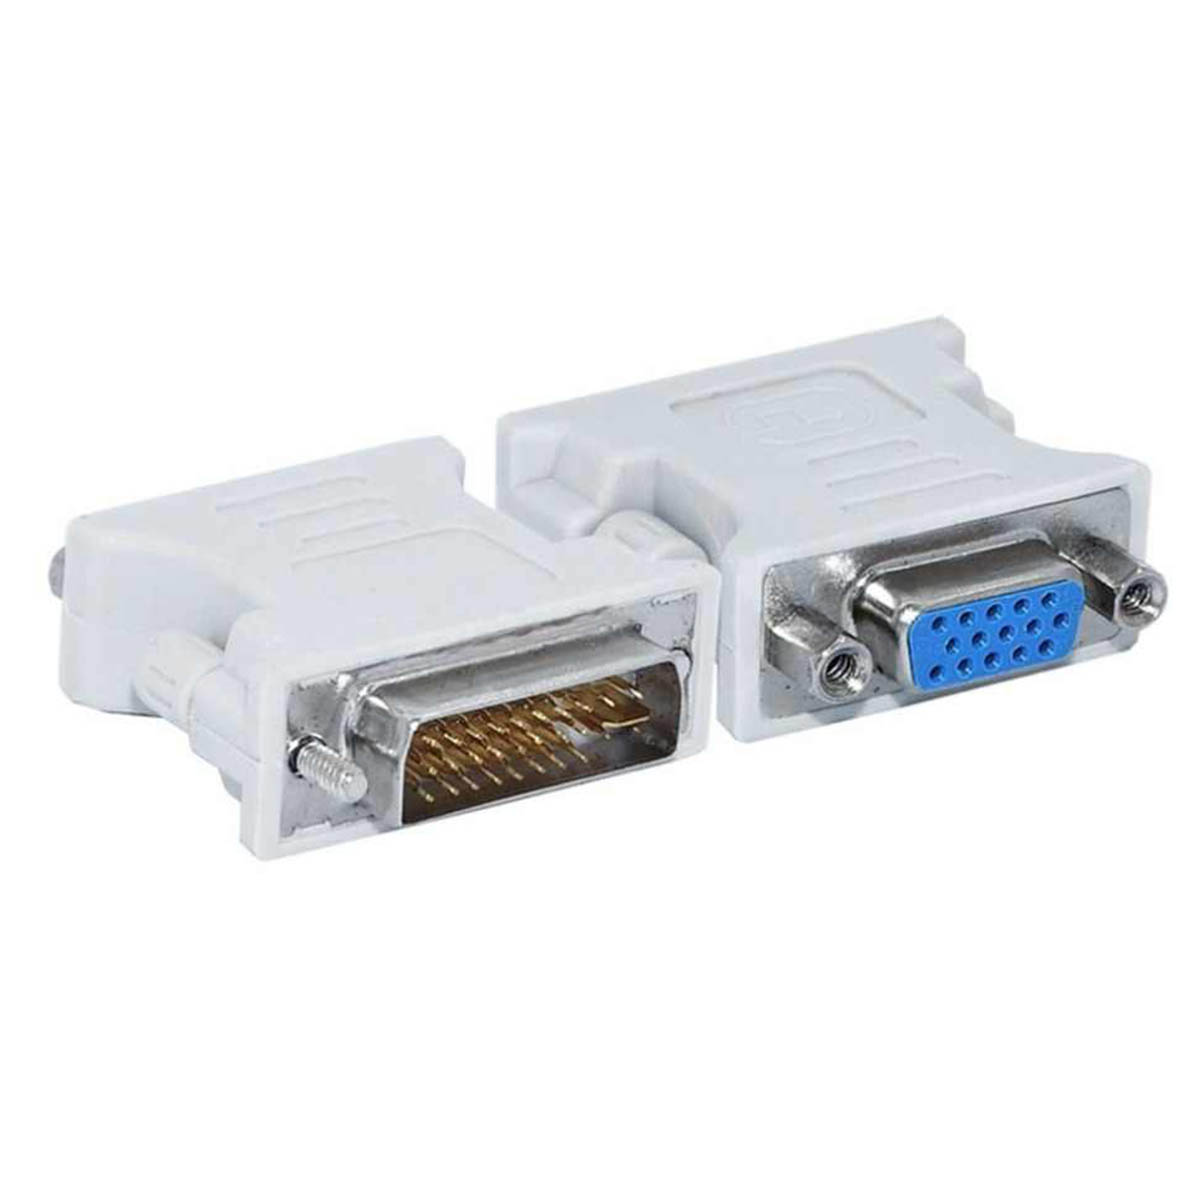 Адаптер, переходник, конвертер H10 DVI-I(Dual Link) - VGA, цвет белый